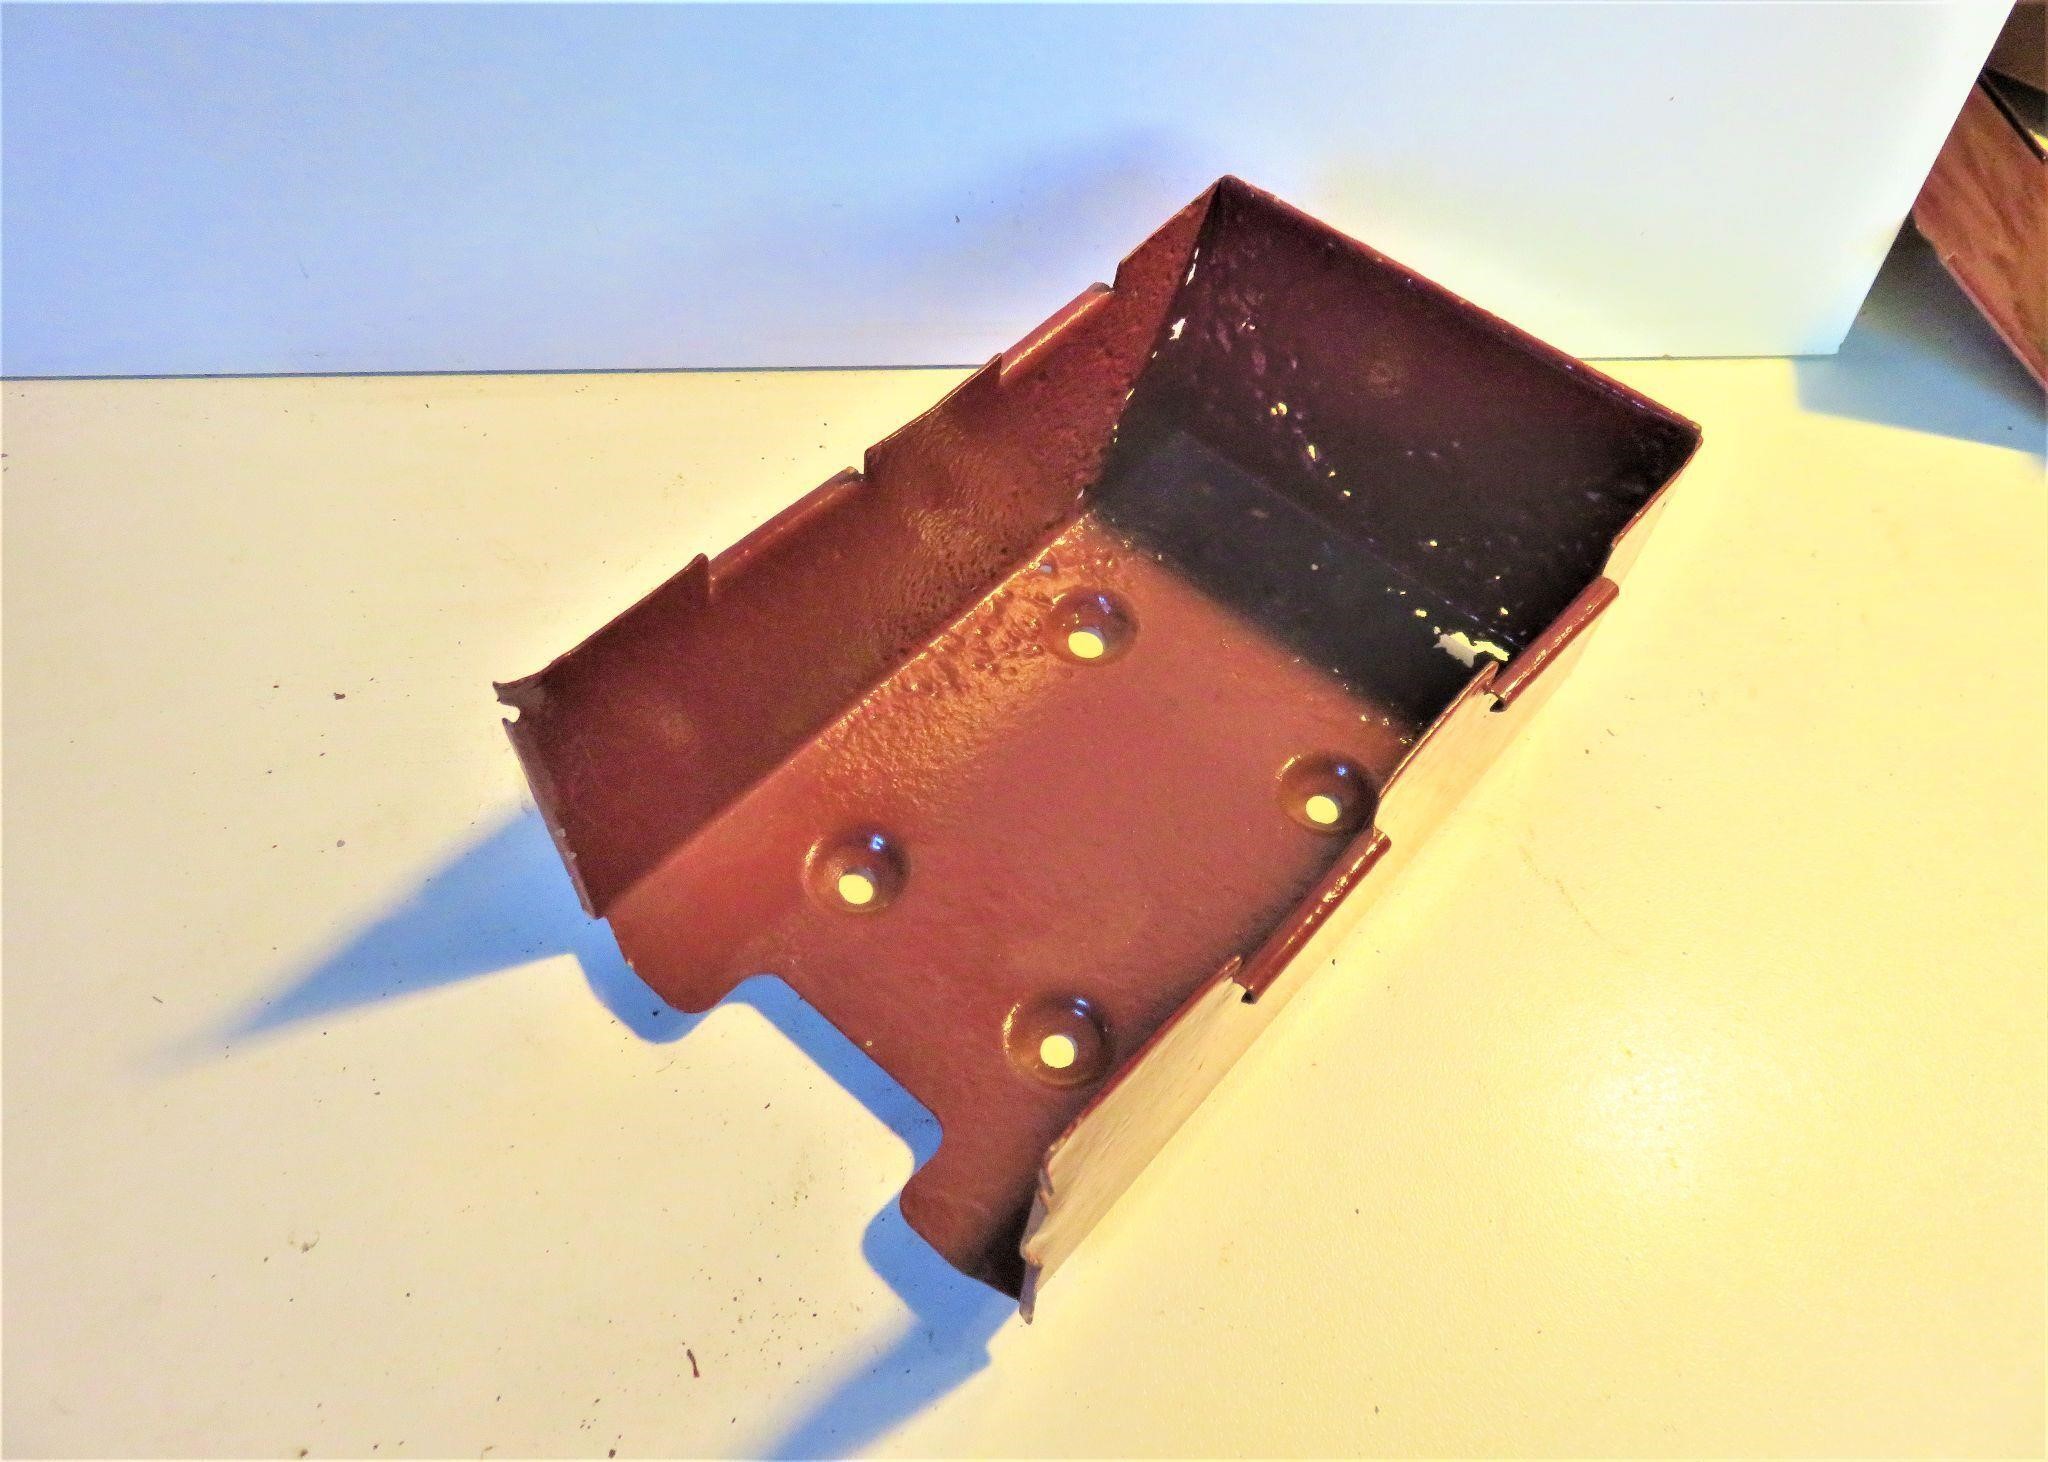 Original Toolbox Shell. Rusted